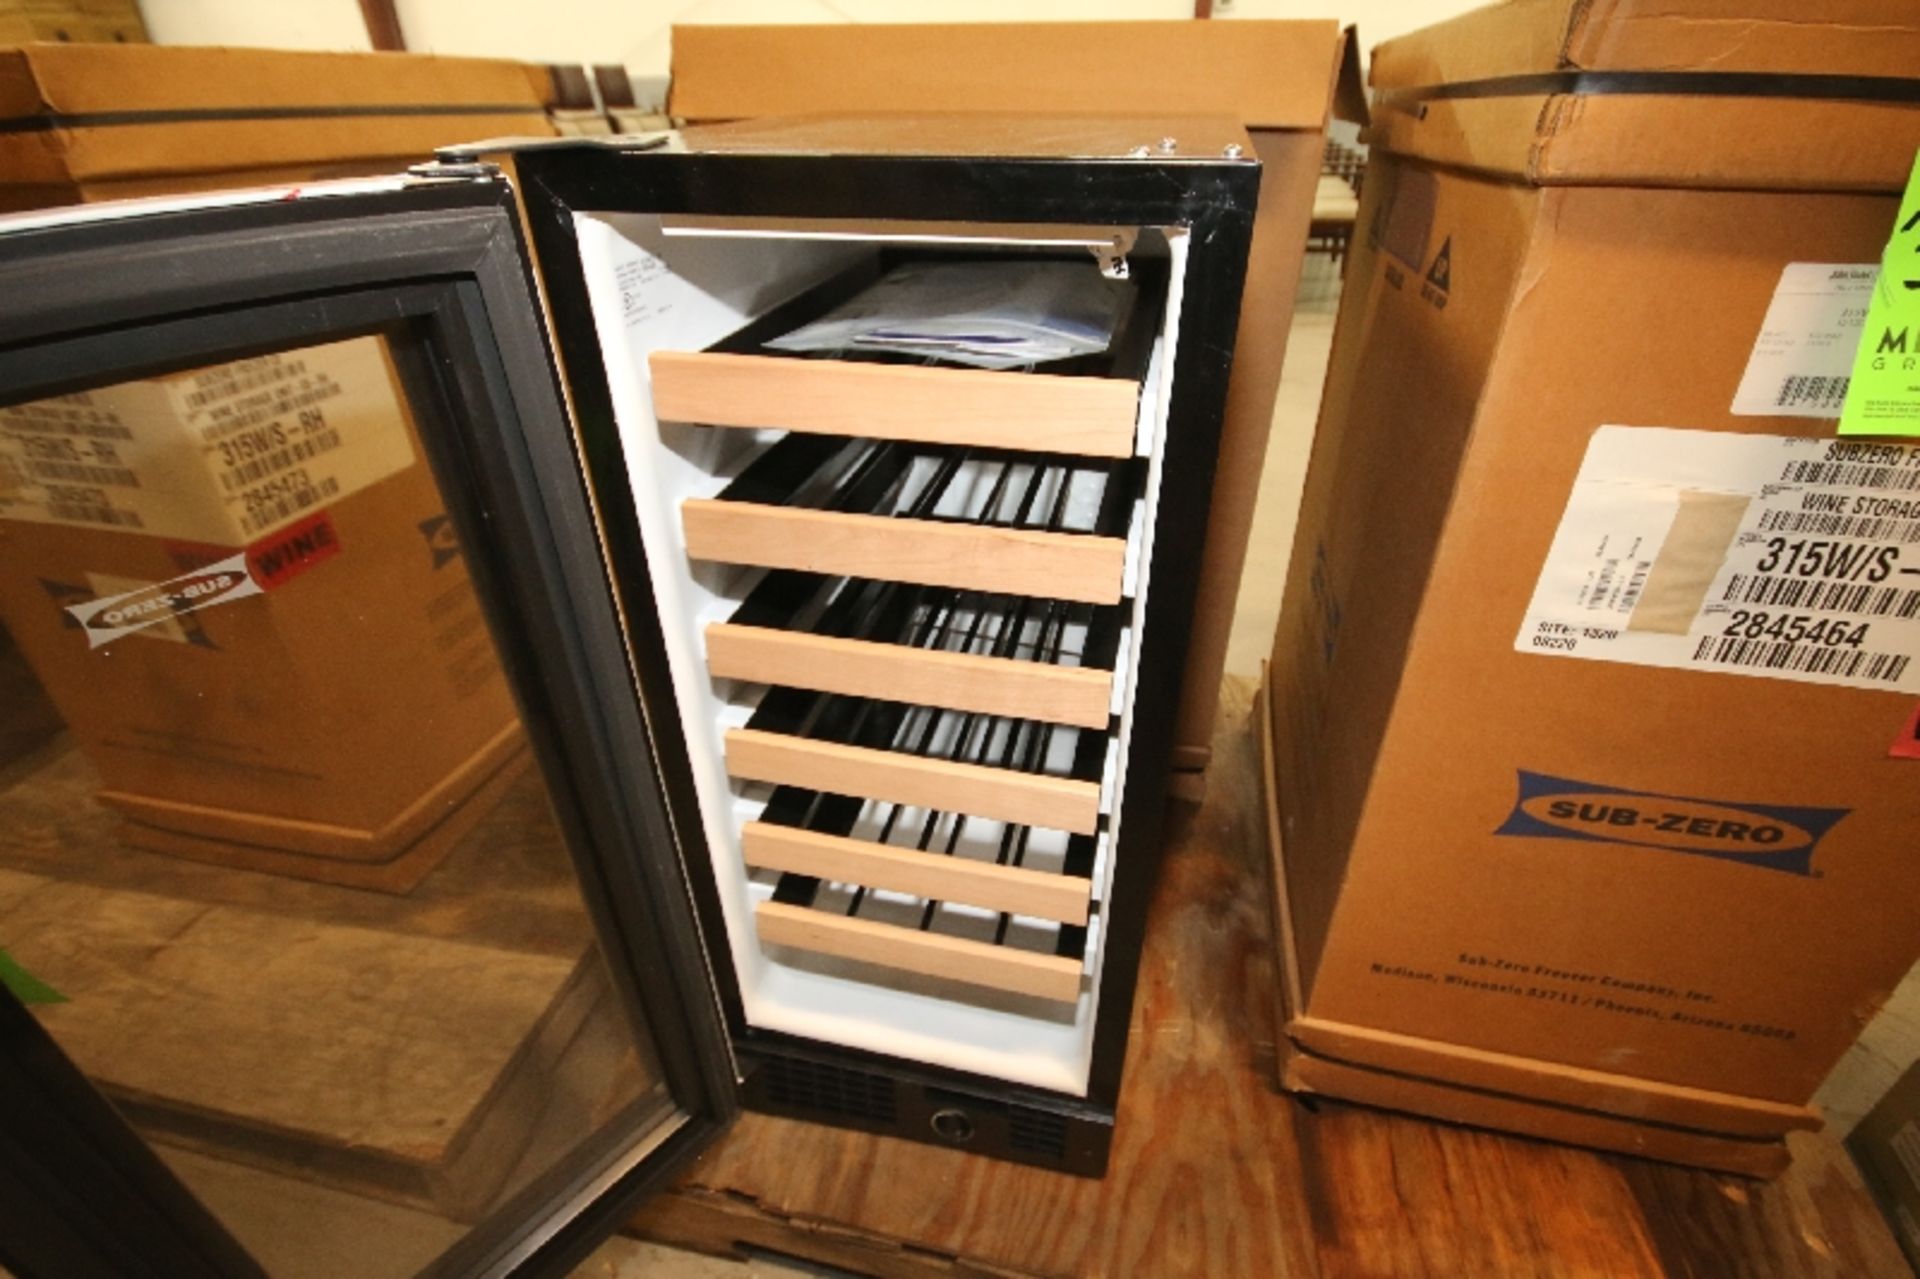 New SubZero Wine Storage Cooler Unit, Model 315W/S-LH, S/N 2845460 - Image 2 of 4